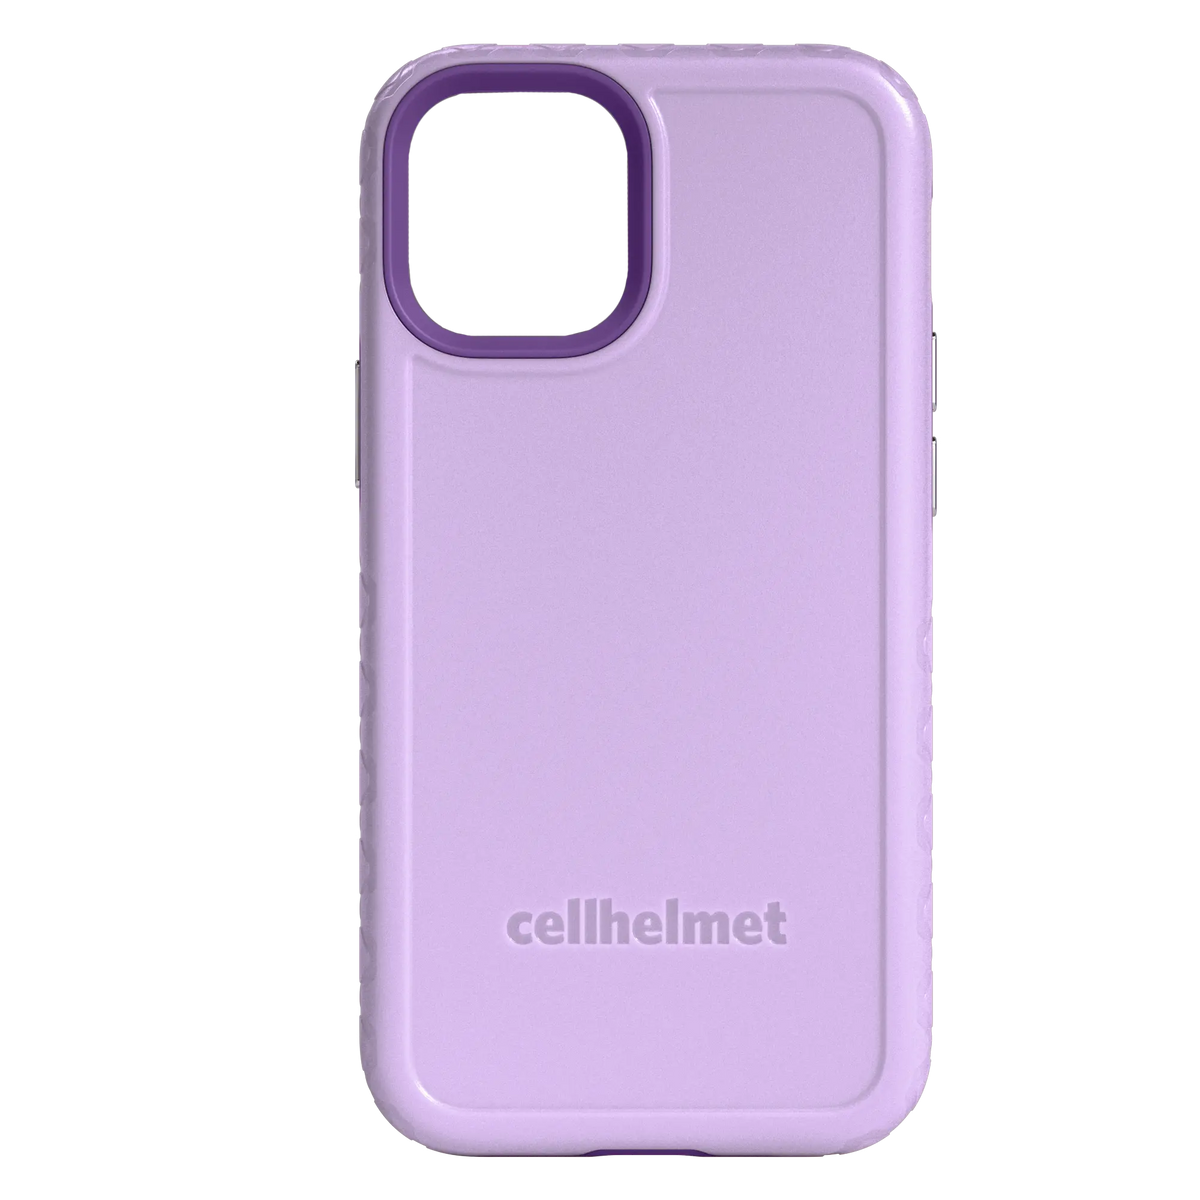 Purple cellhelmet Customizable Case for iPhone 12 Mini